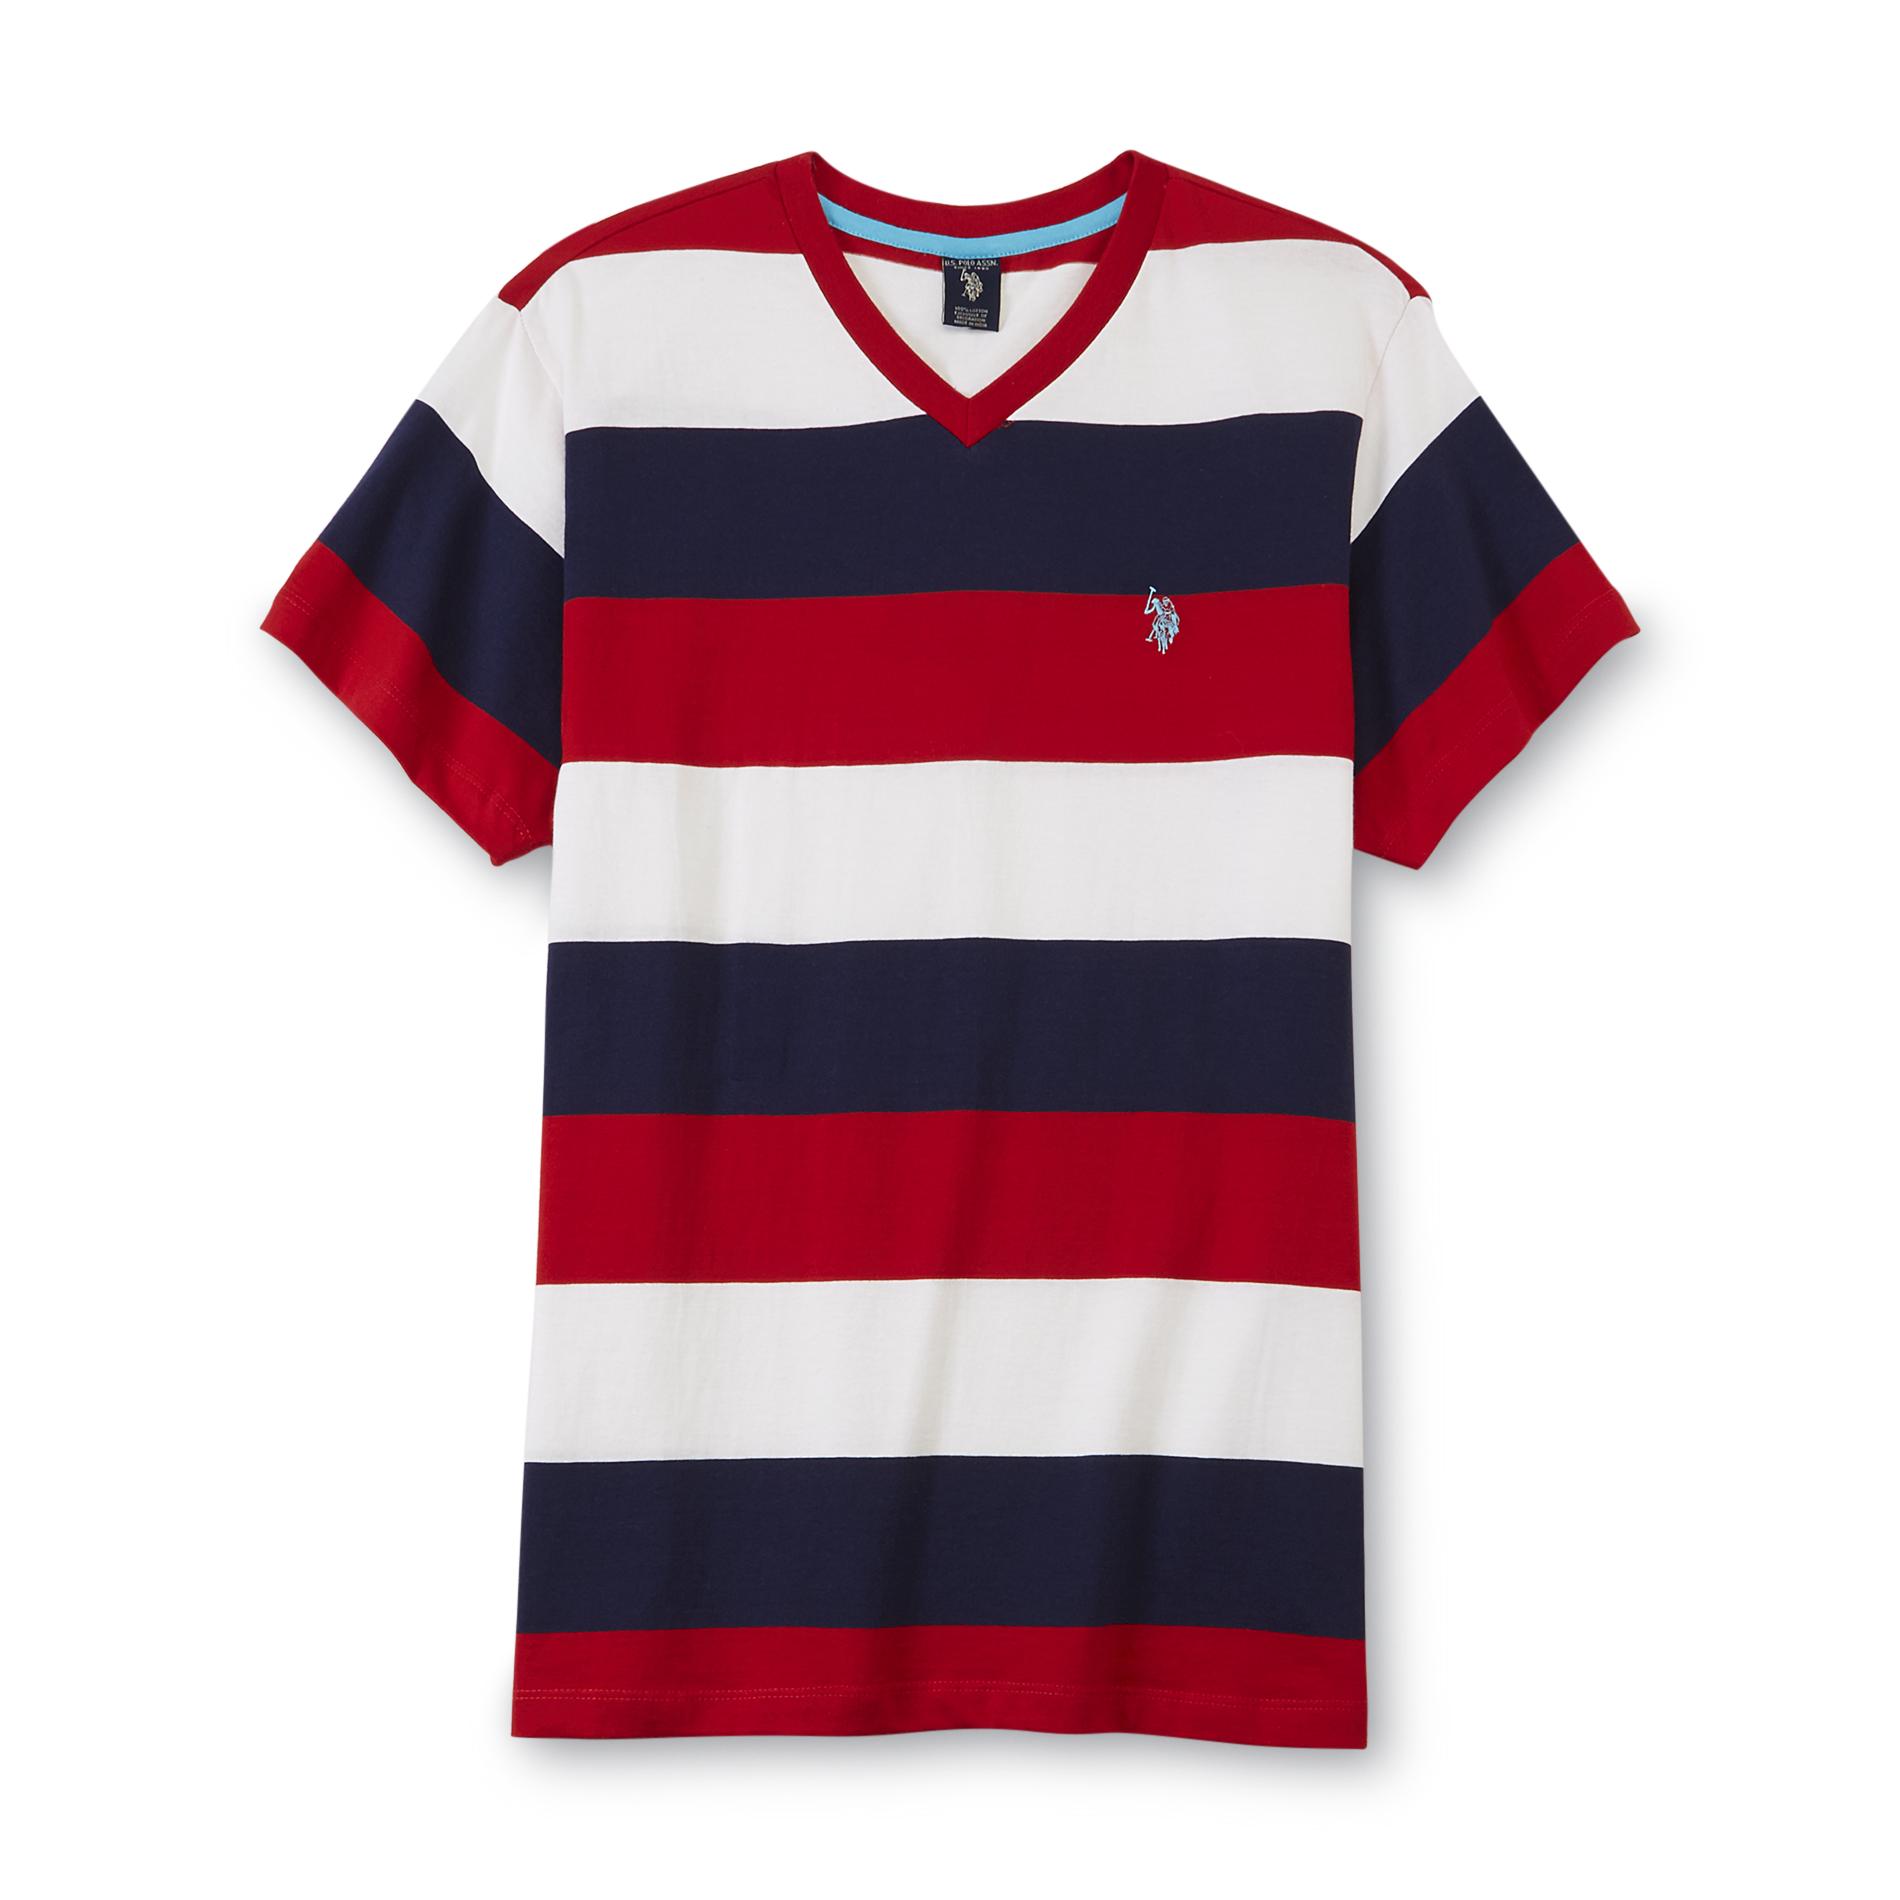 U.S. Polo Assn. Men's V-Neck T-Shirt - Rugby Stripes